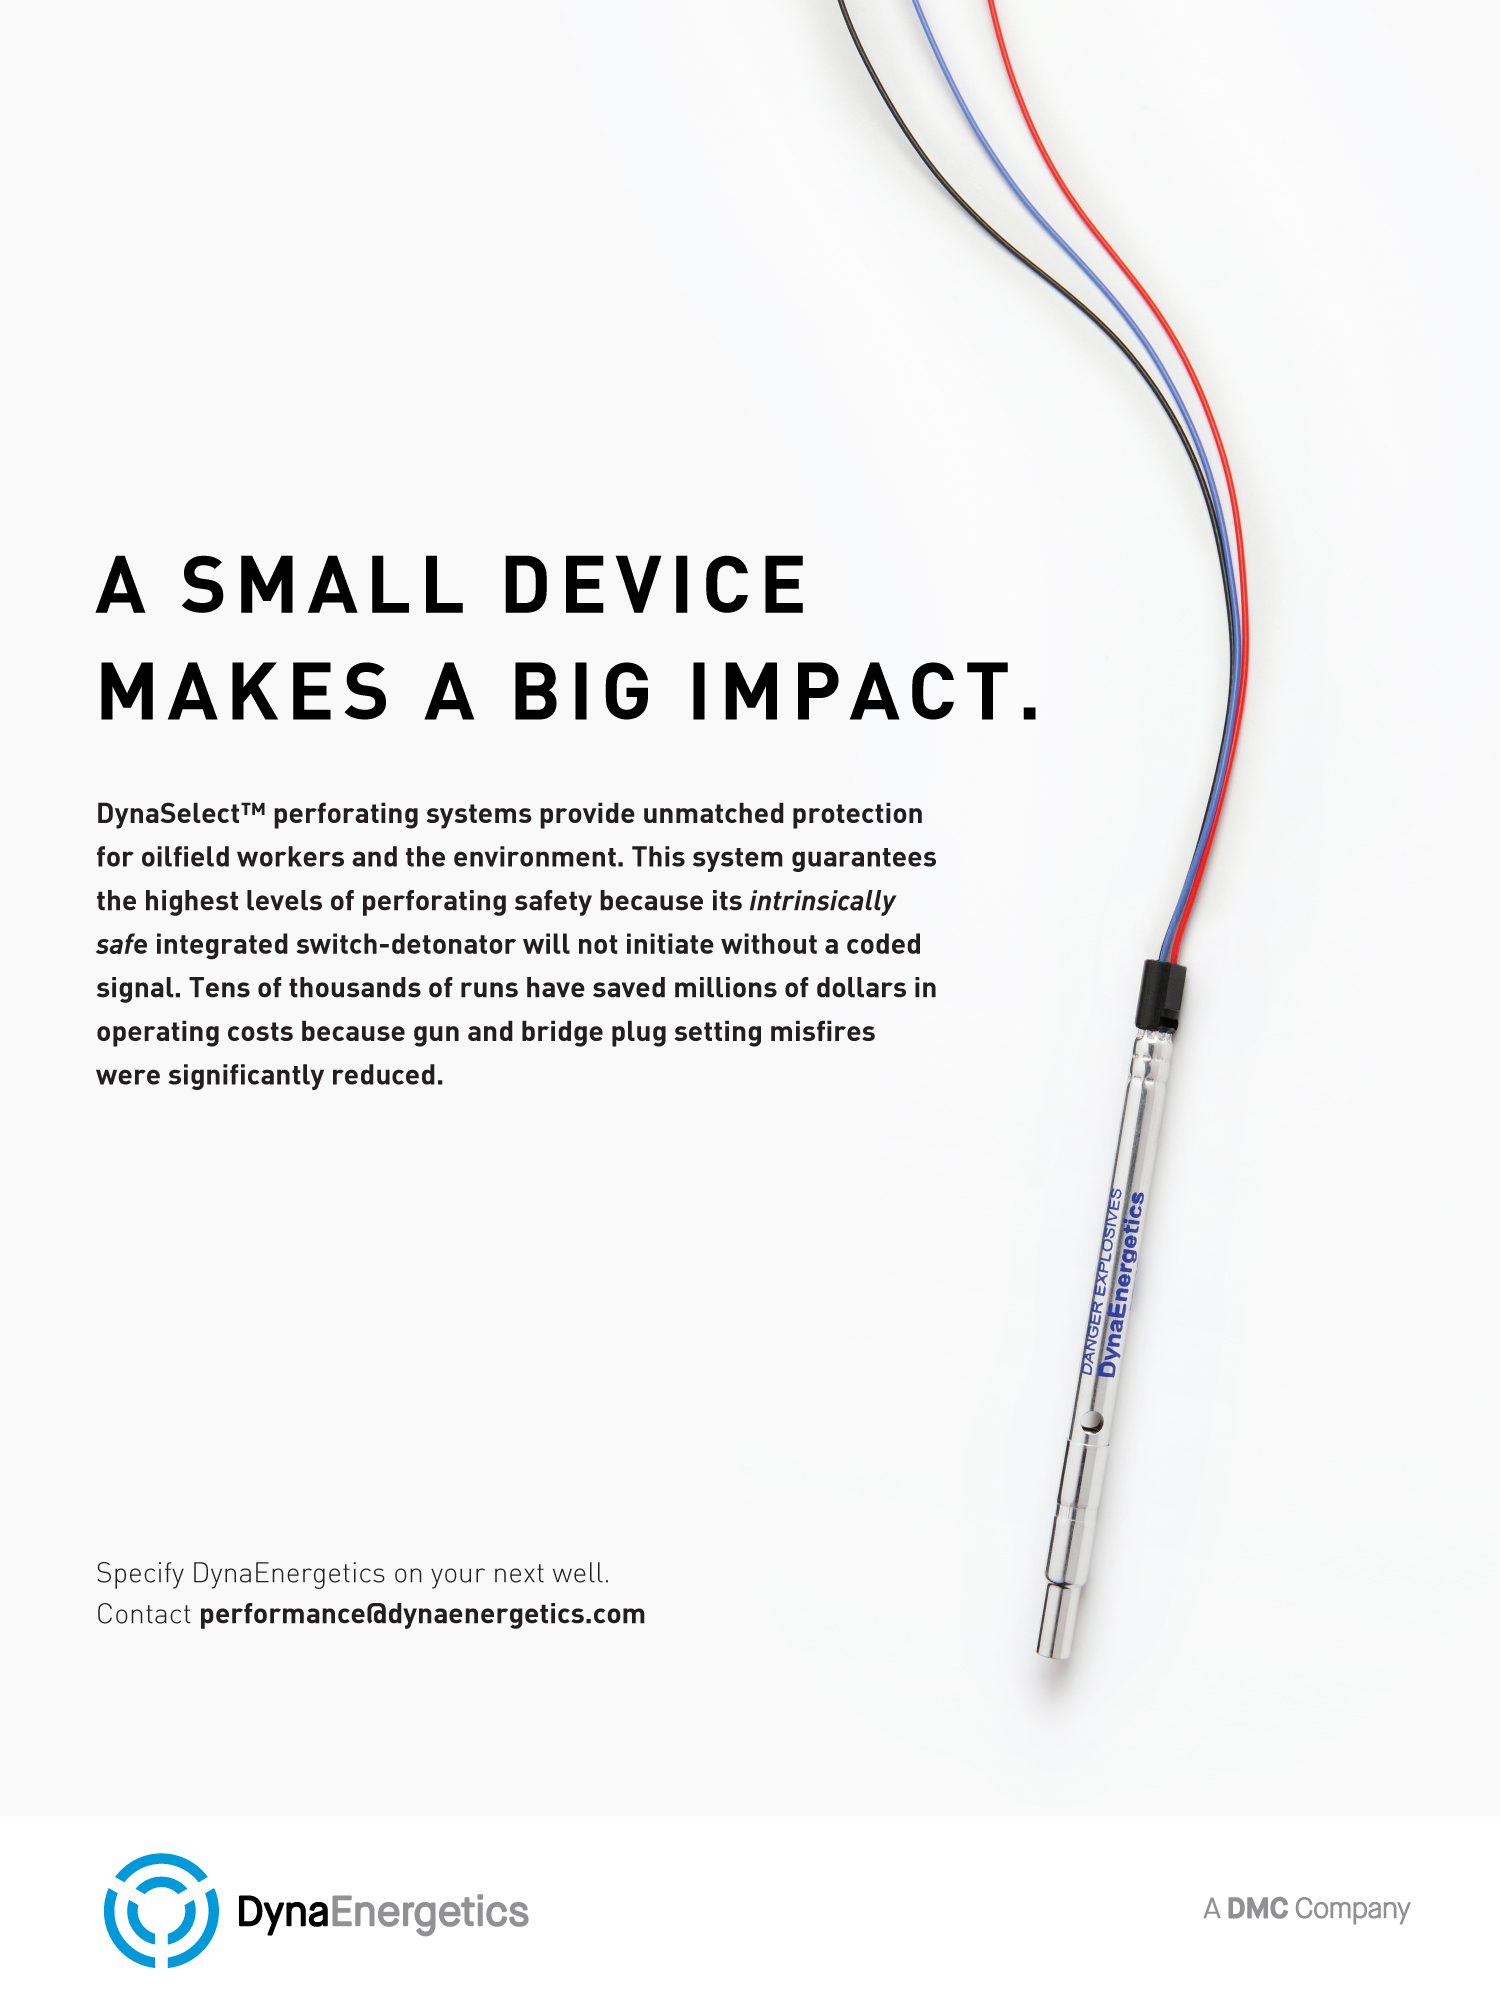 DynaSelect - A Small Device Makes a Big Impact